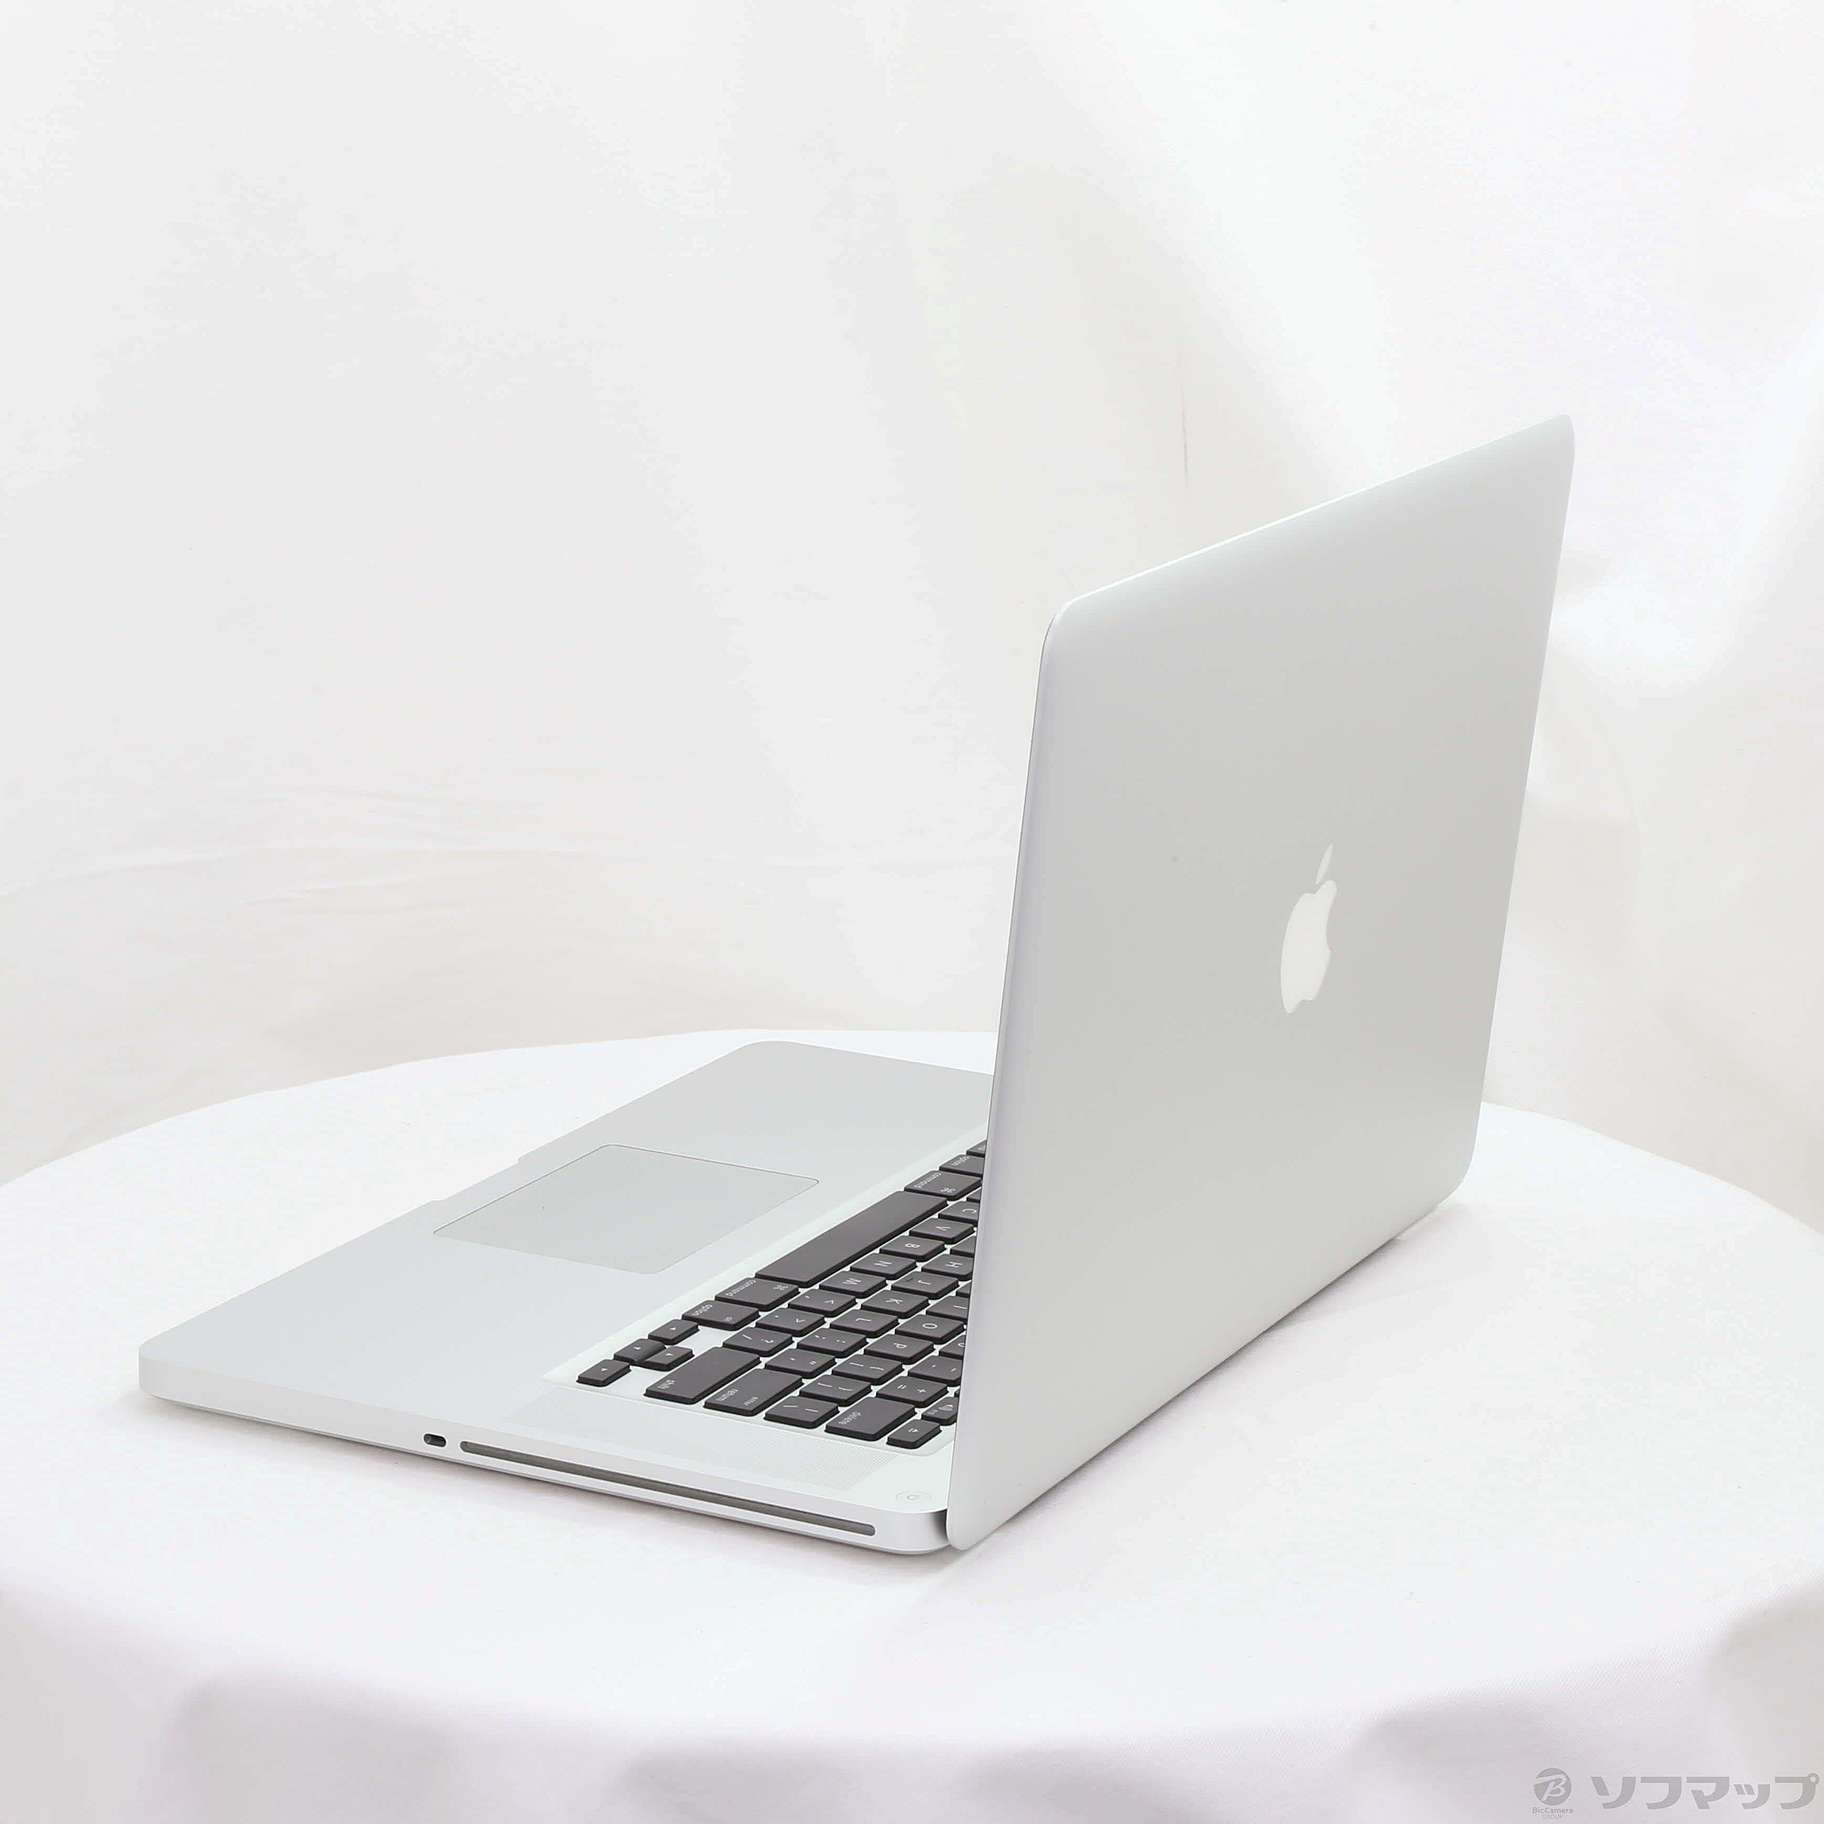 中古】MacBook Pro 15-inch Mid 2009 MB986J／A(BTO) 3.06GHz 8GB ...